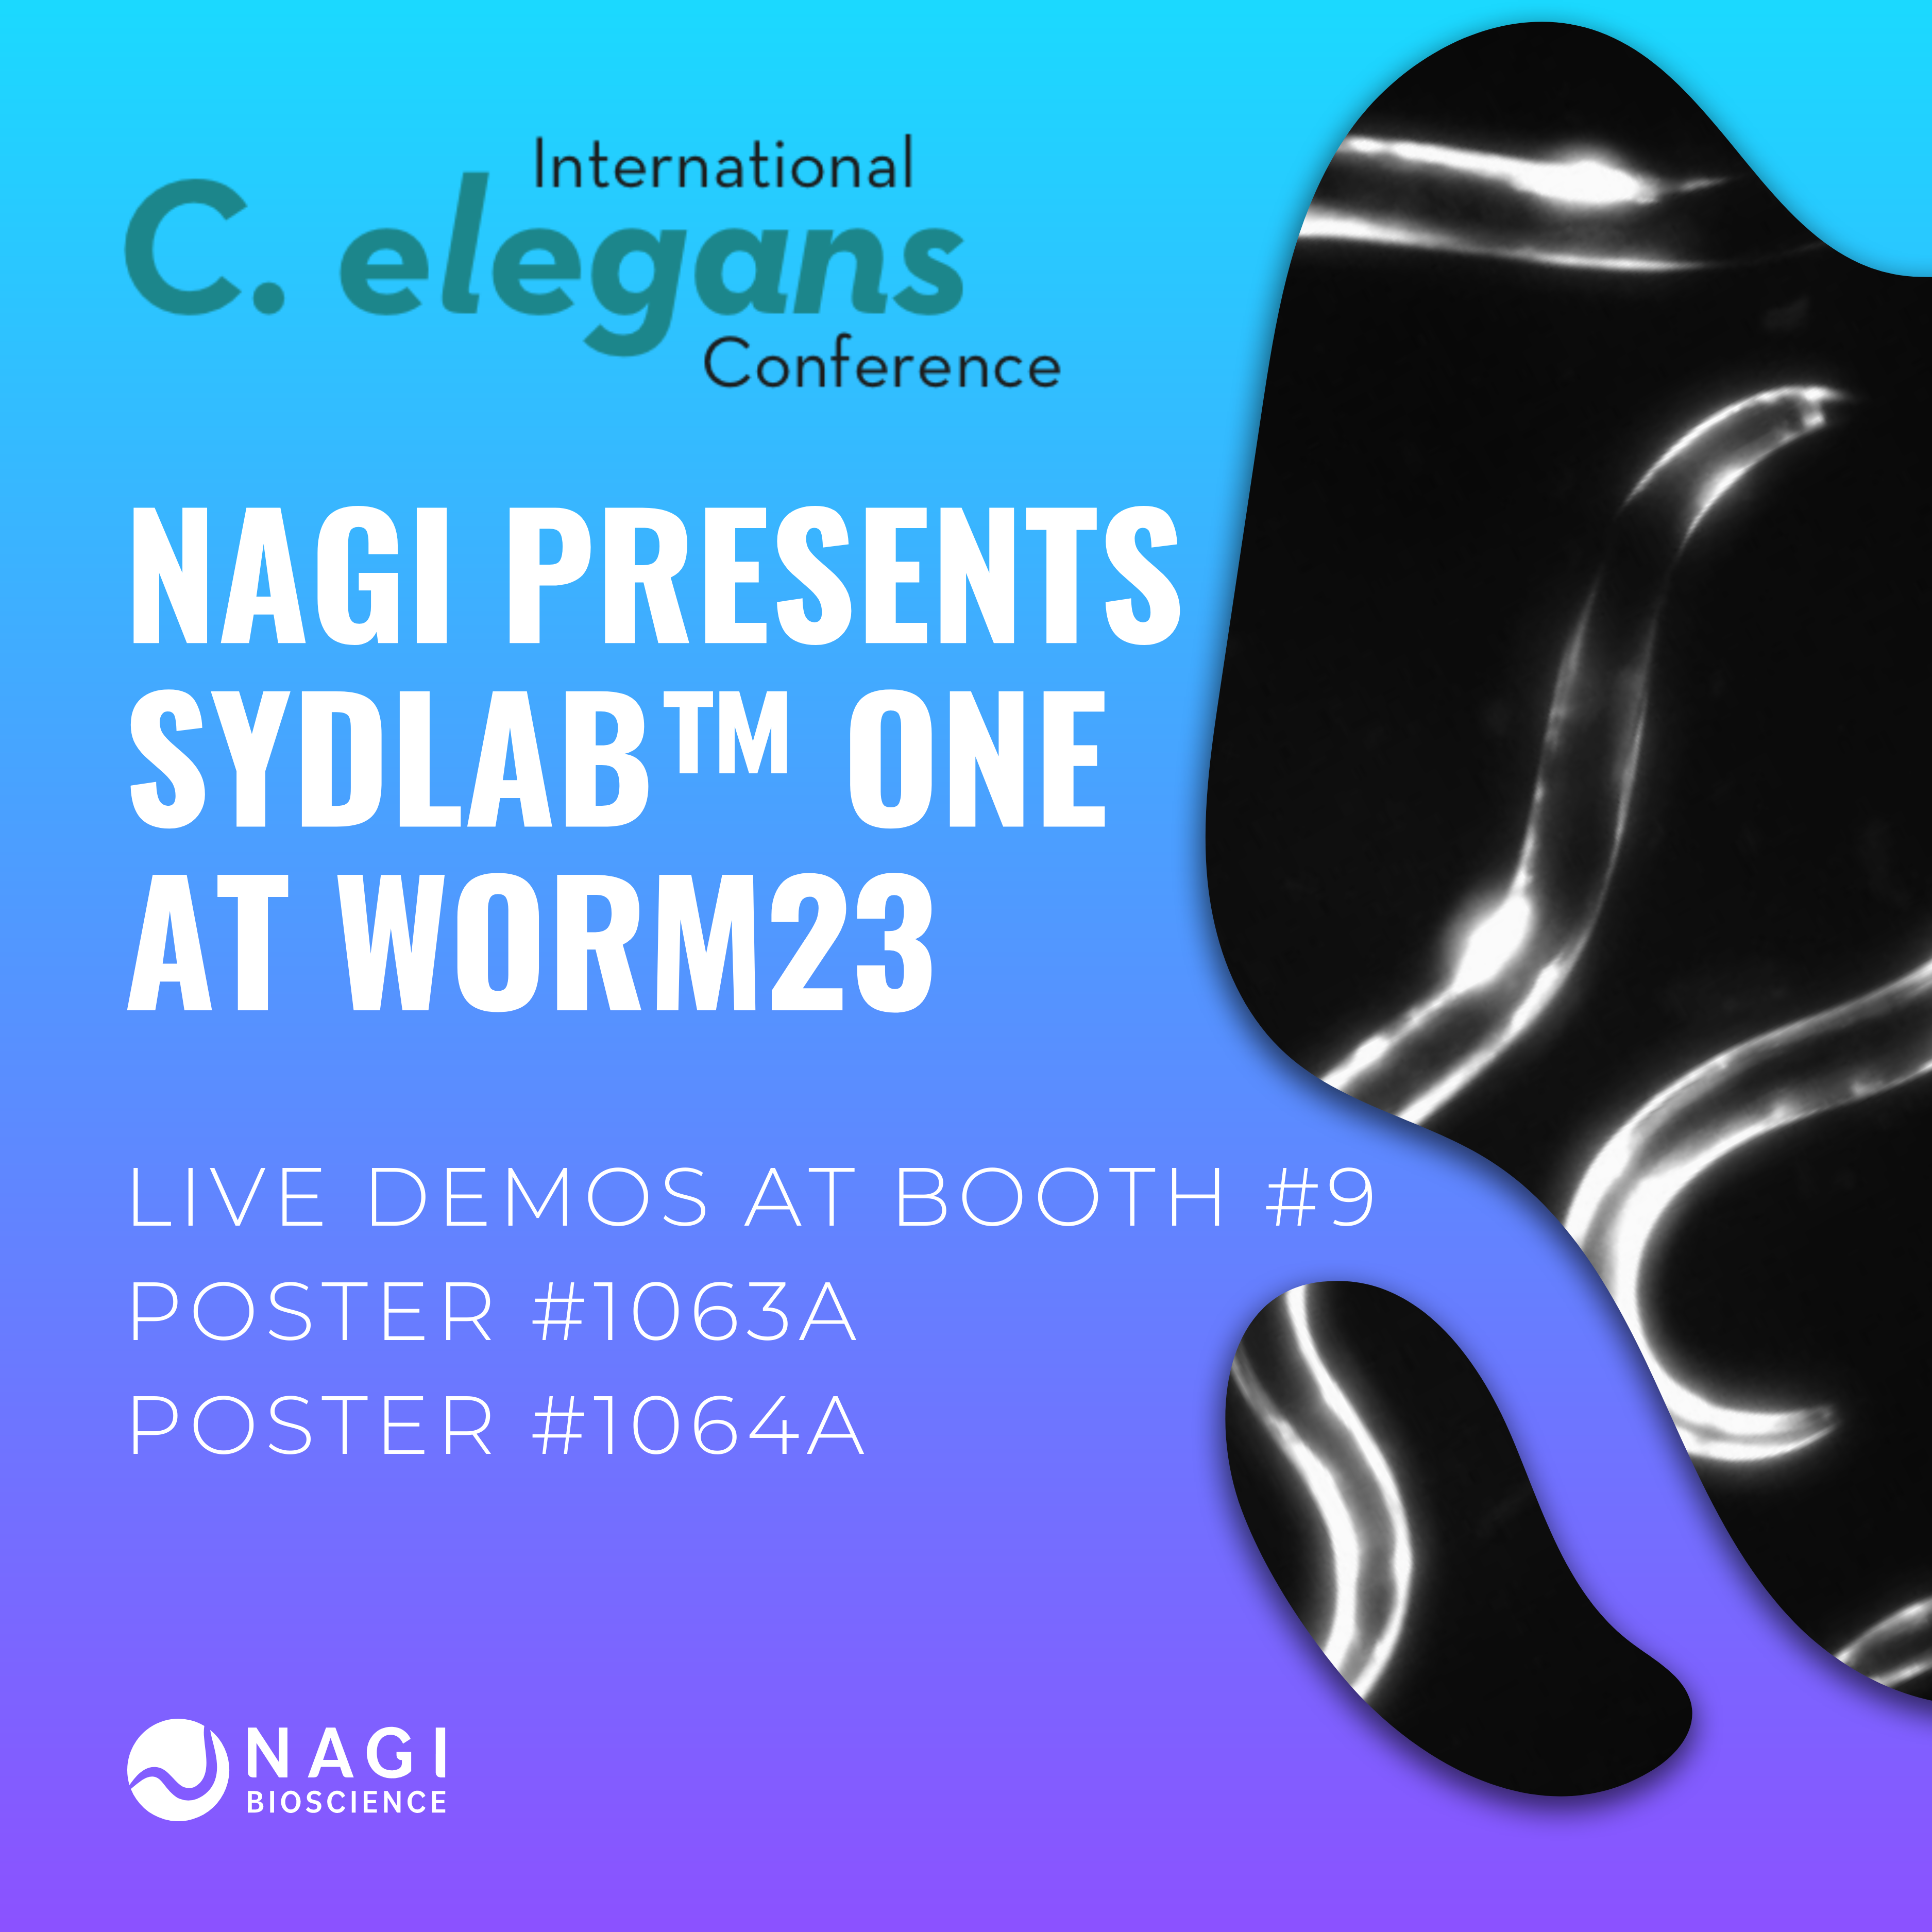 Nagi presents sydlab one at worm23